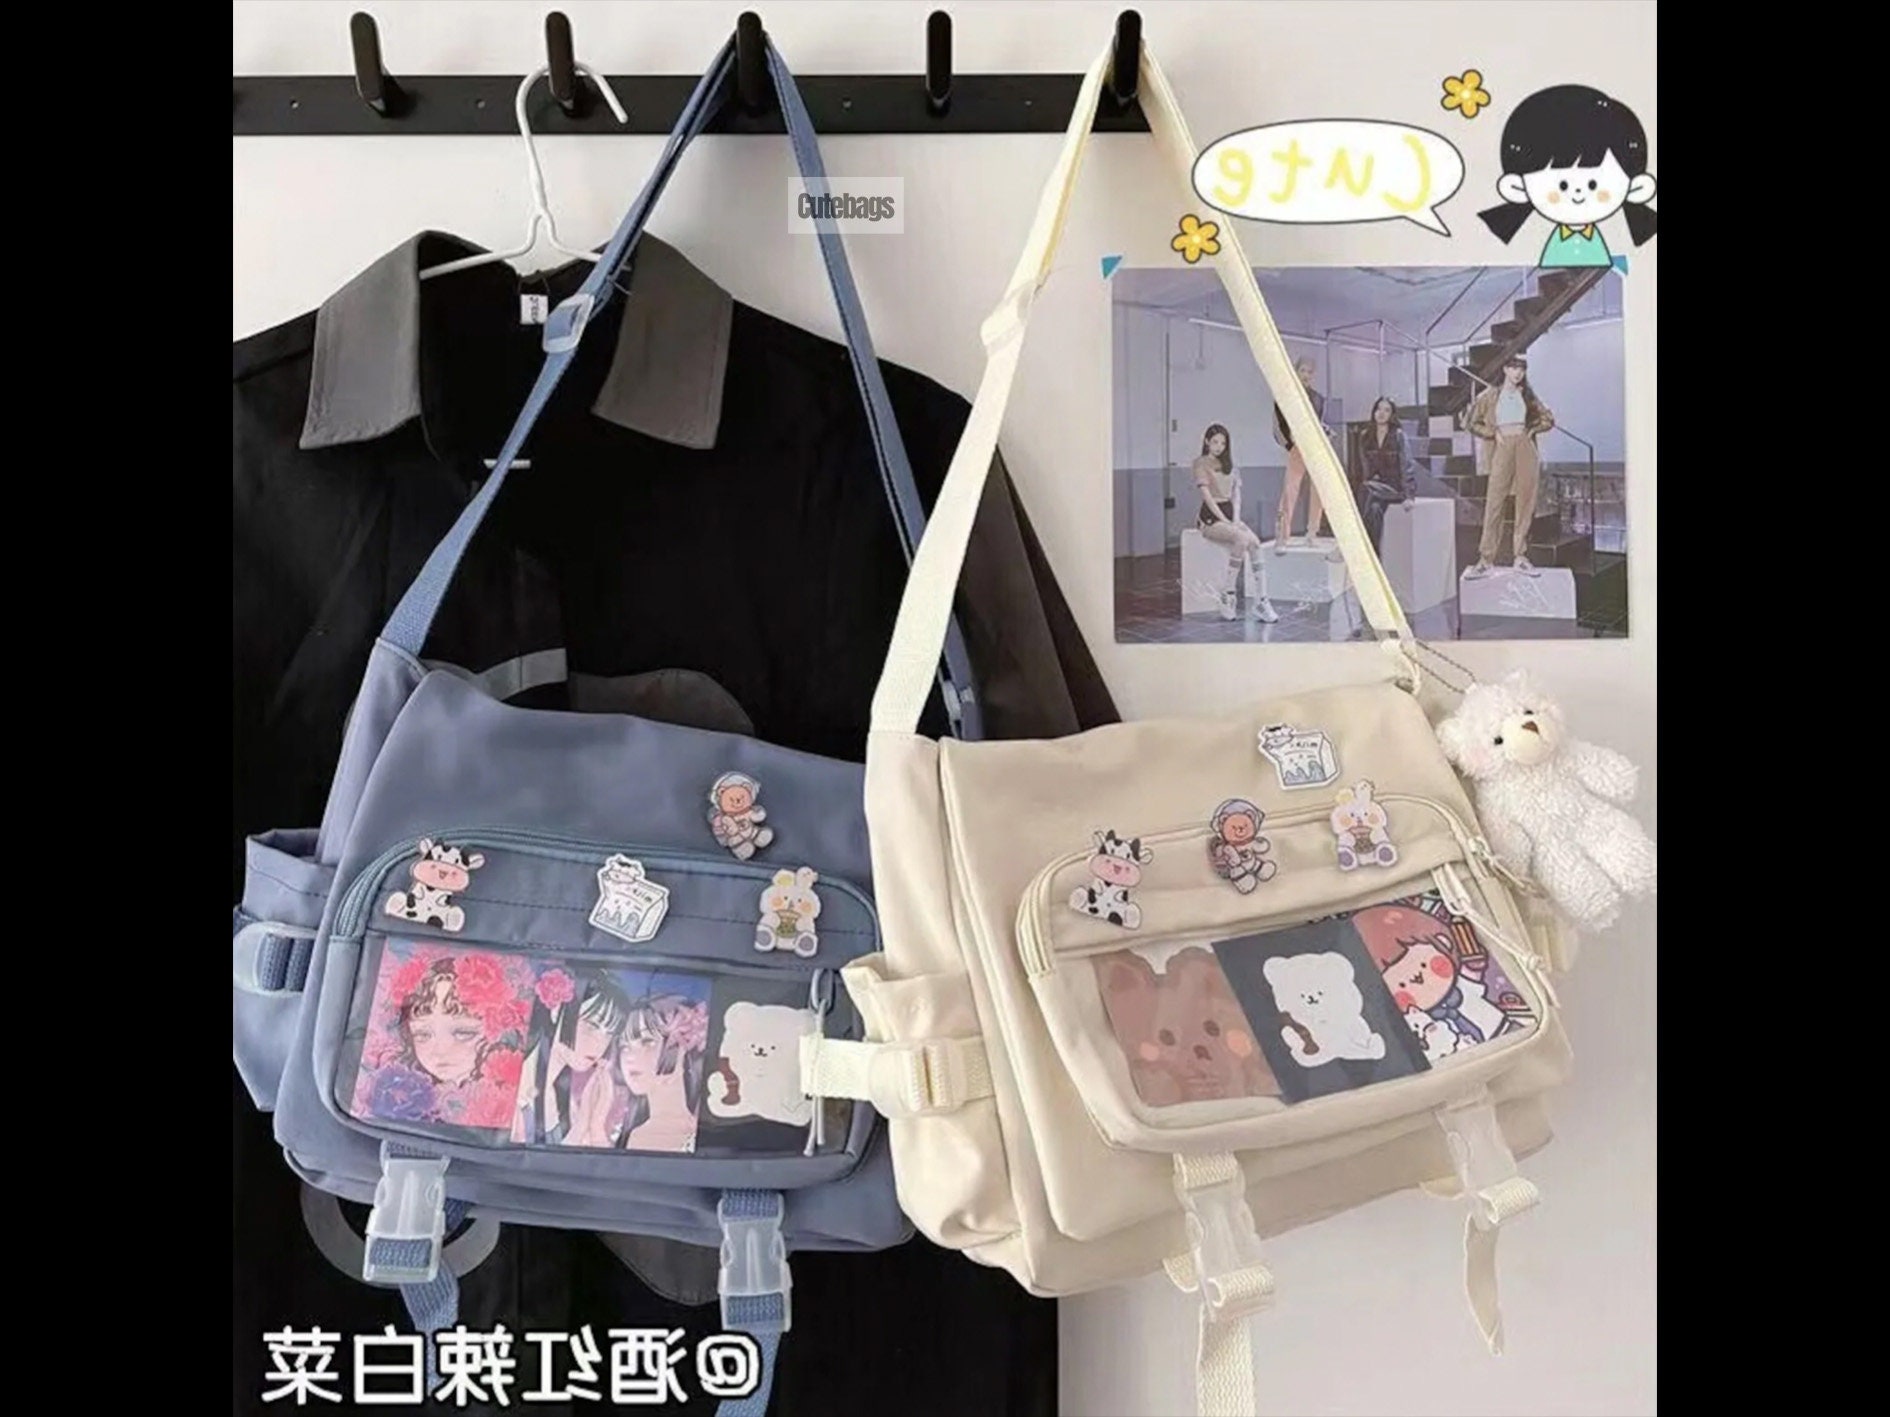 Skip to Loafer Anime Cosplay Casual Canvas Bag Student Shoulder Bag